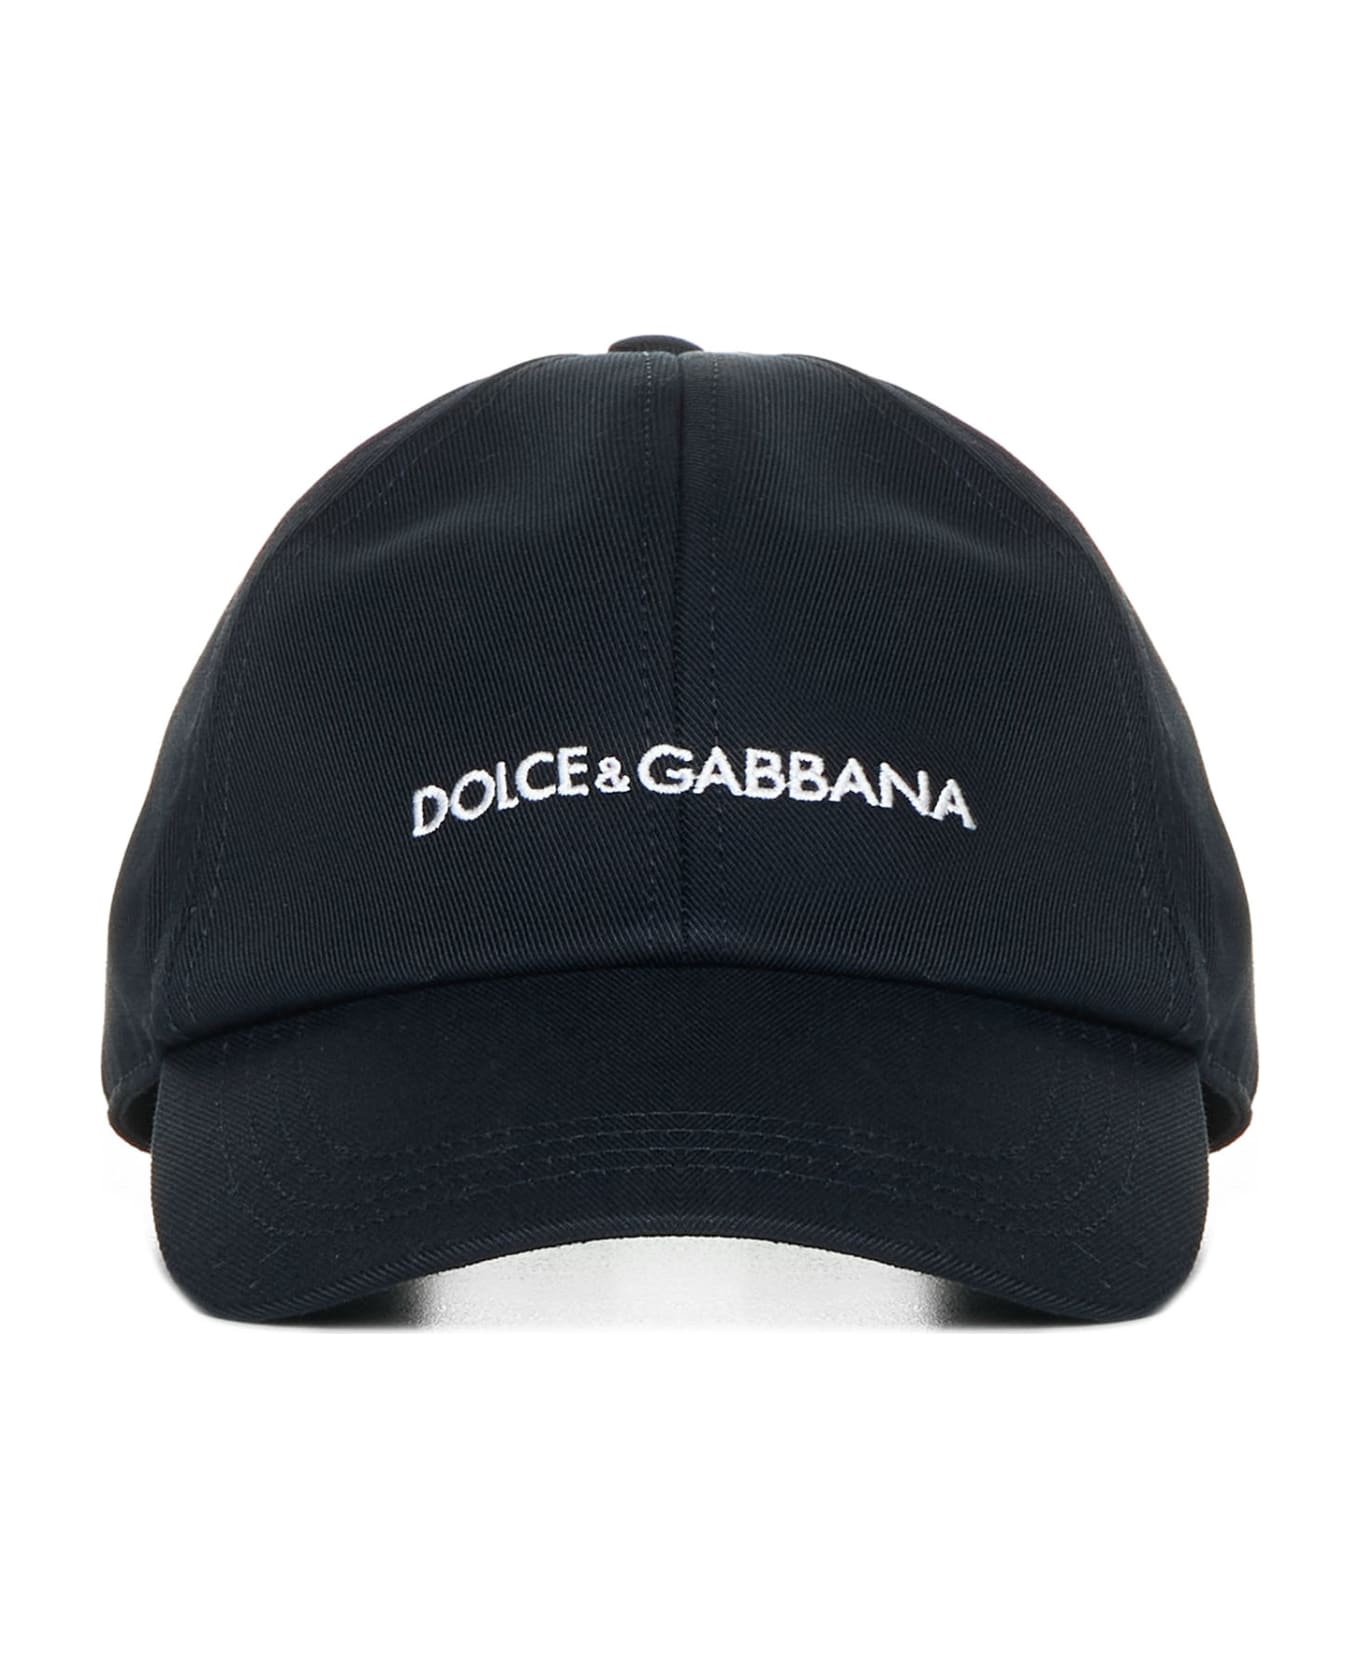 Dolce & Gabbana Logo Embroidered Baseball Cap - Black